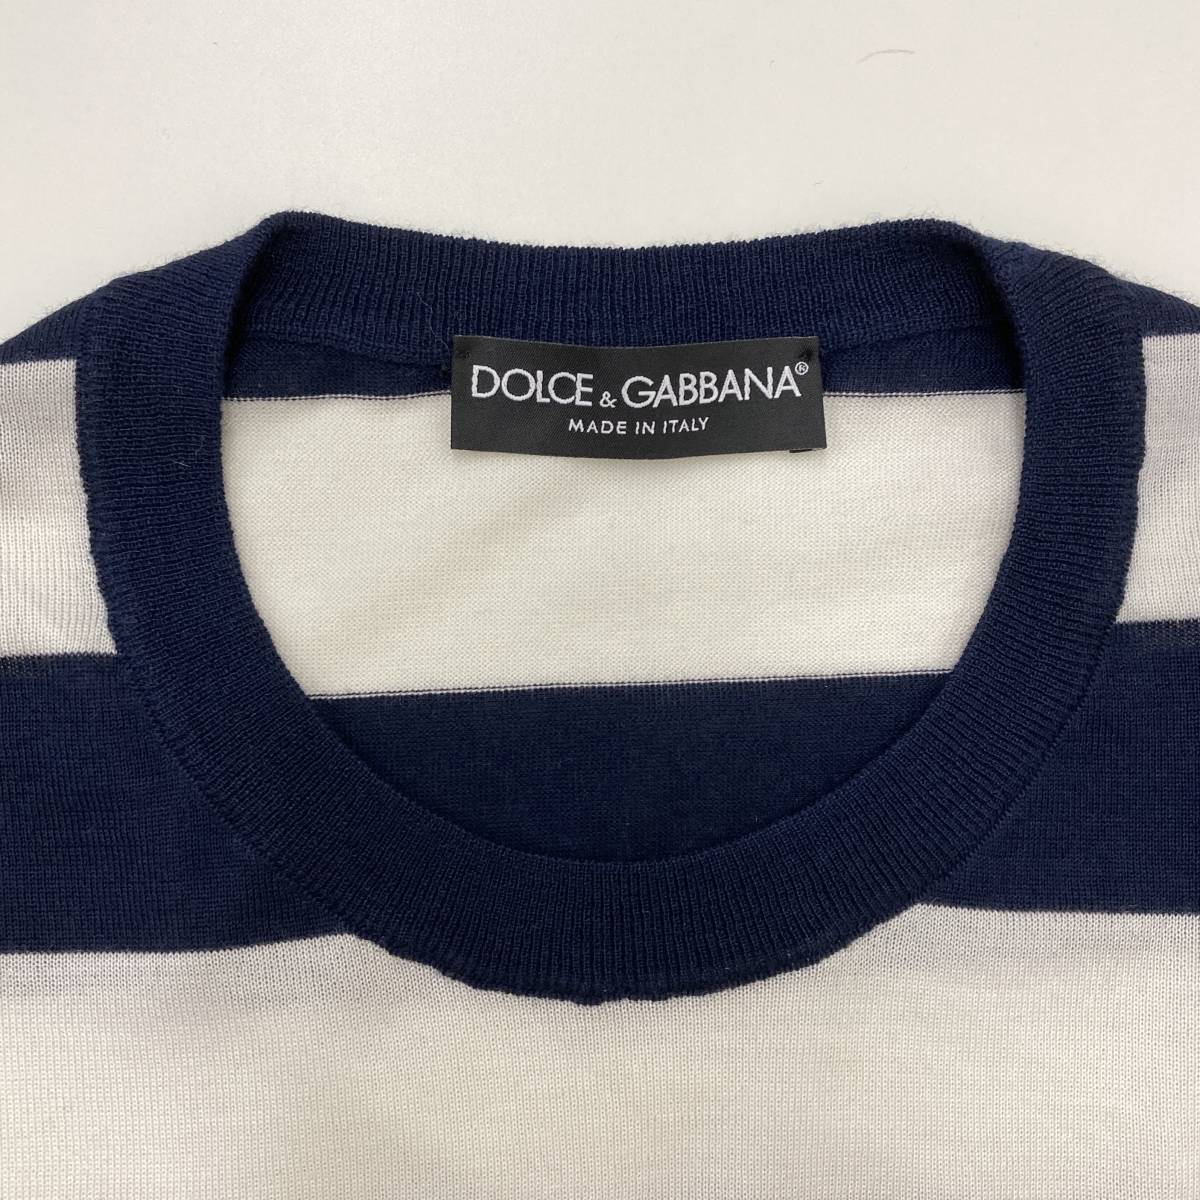 DOLCE&GABBANA cashmere wool border knitted sweater Italy made men's 46 size Dolce & Gabbana Dolce&Gabbana D&G 3060300